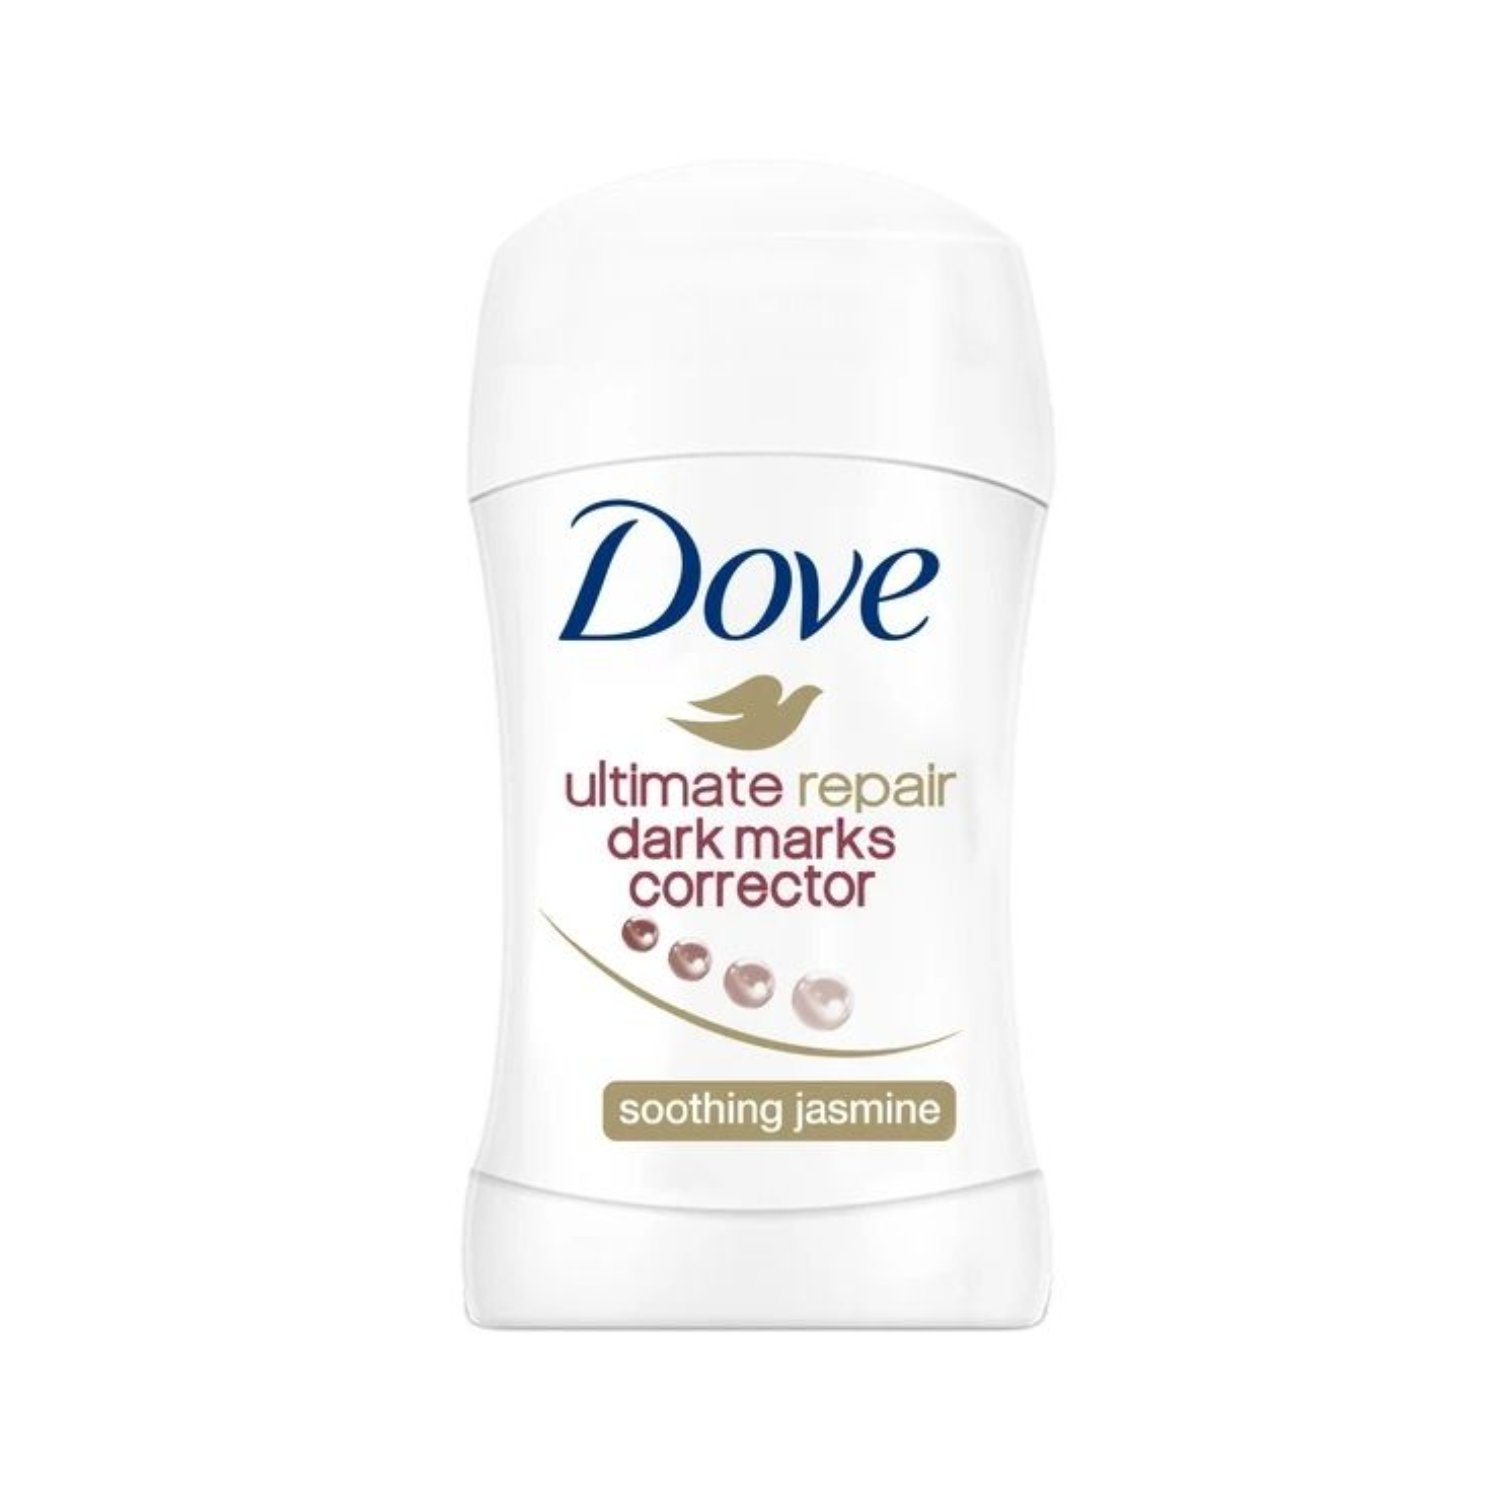 dove-ultimate-repair-darkmarks-corrector-soothing-jasmine-stick-philippines-40ml